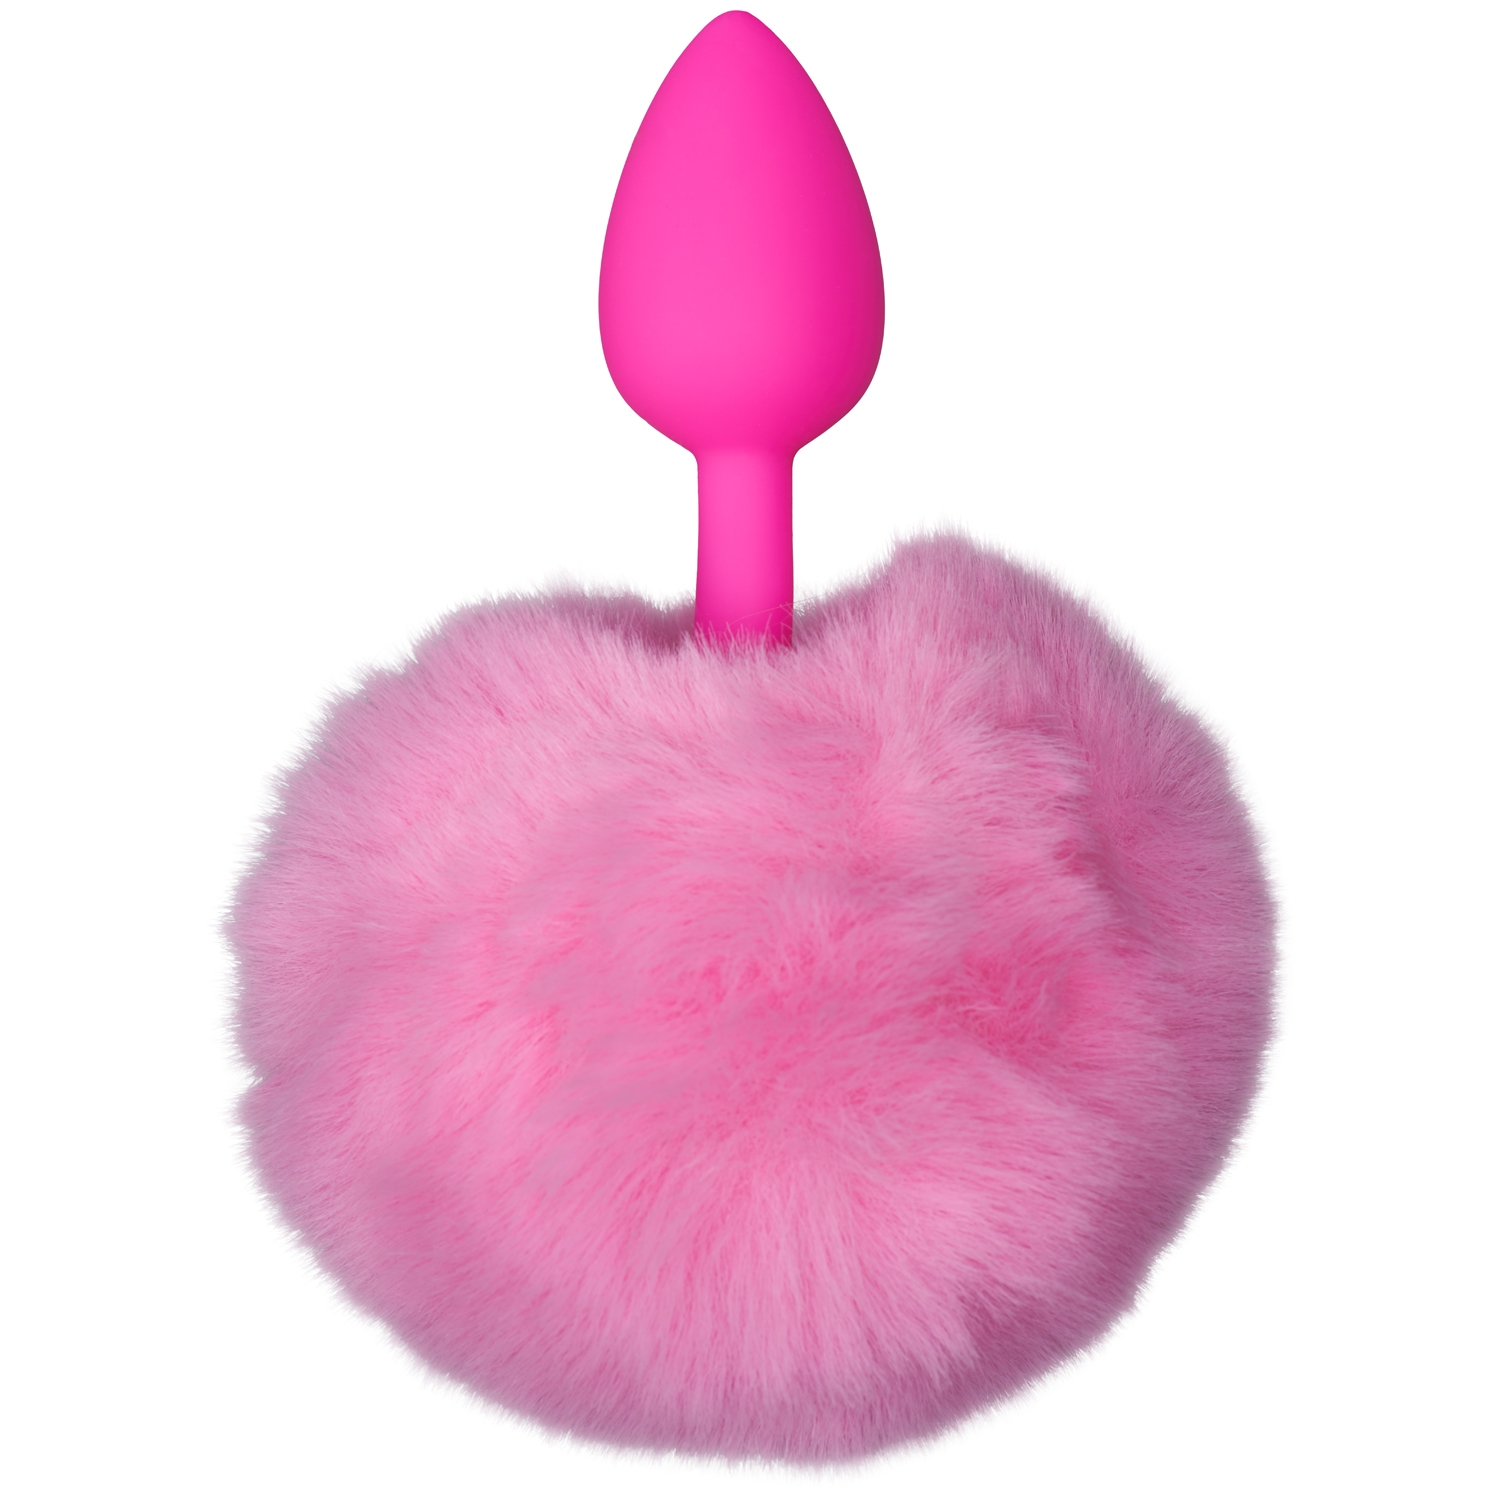 baseks Pink Furry Bunny Tail Butt Plug - Pink